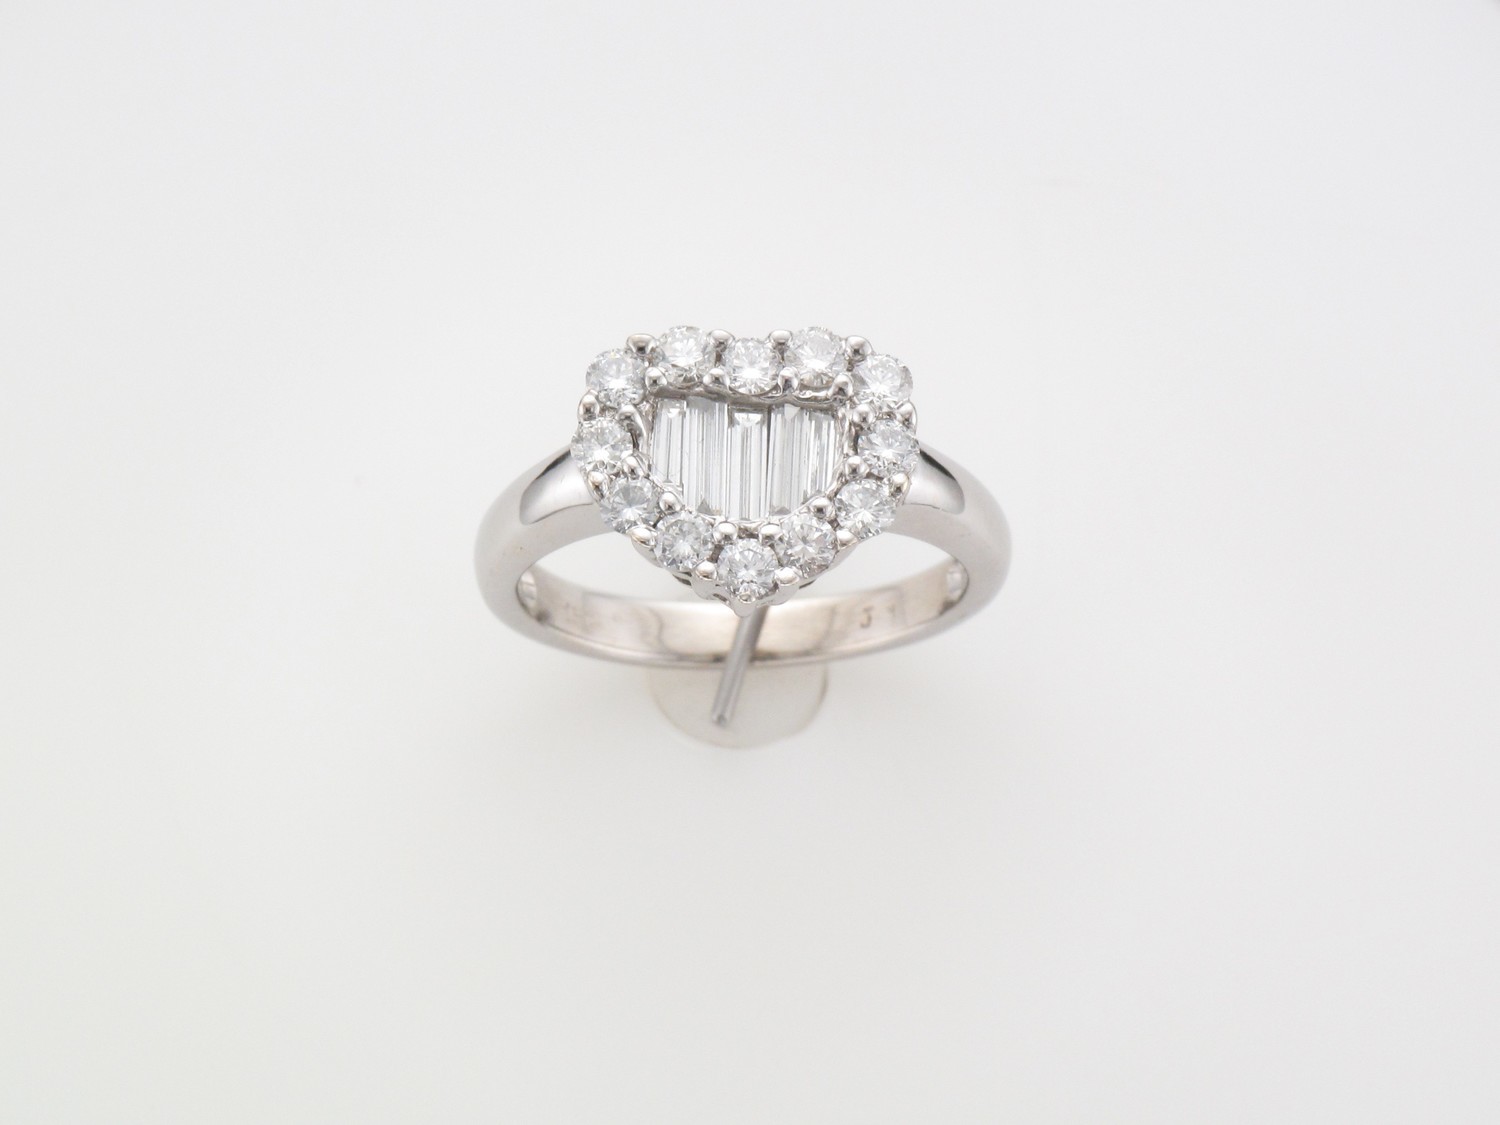 18 carat white gold heart shaped diamond ring